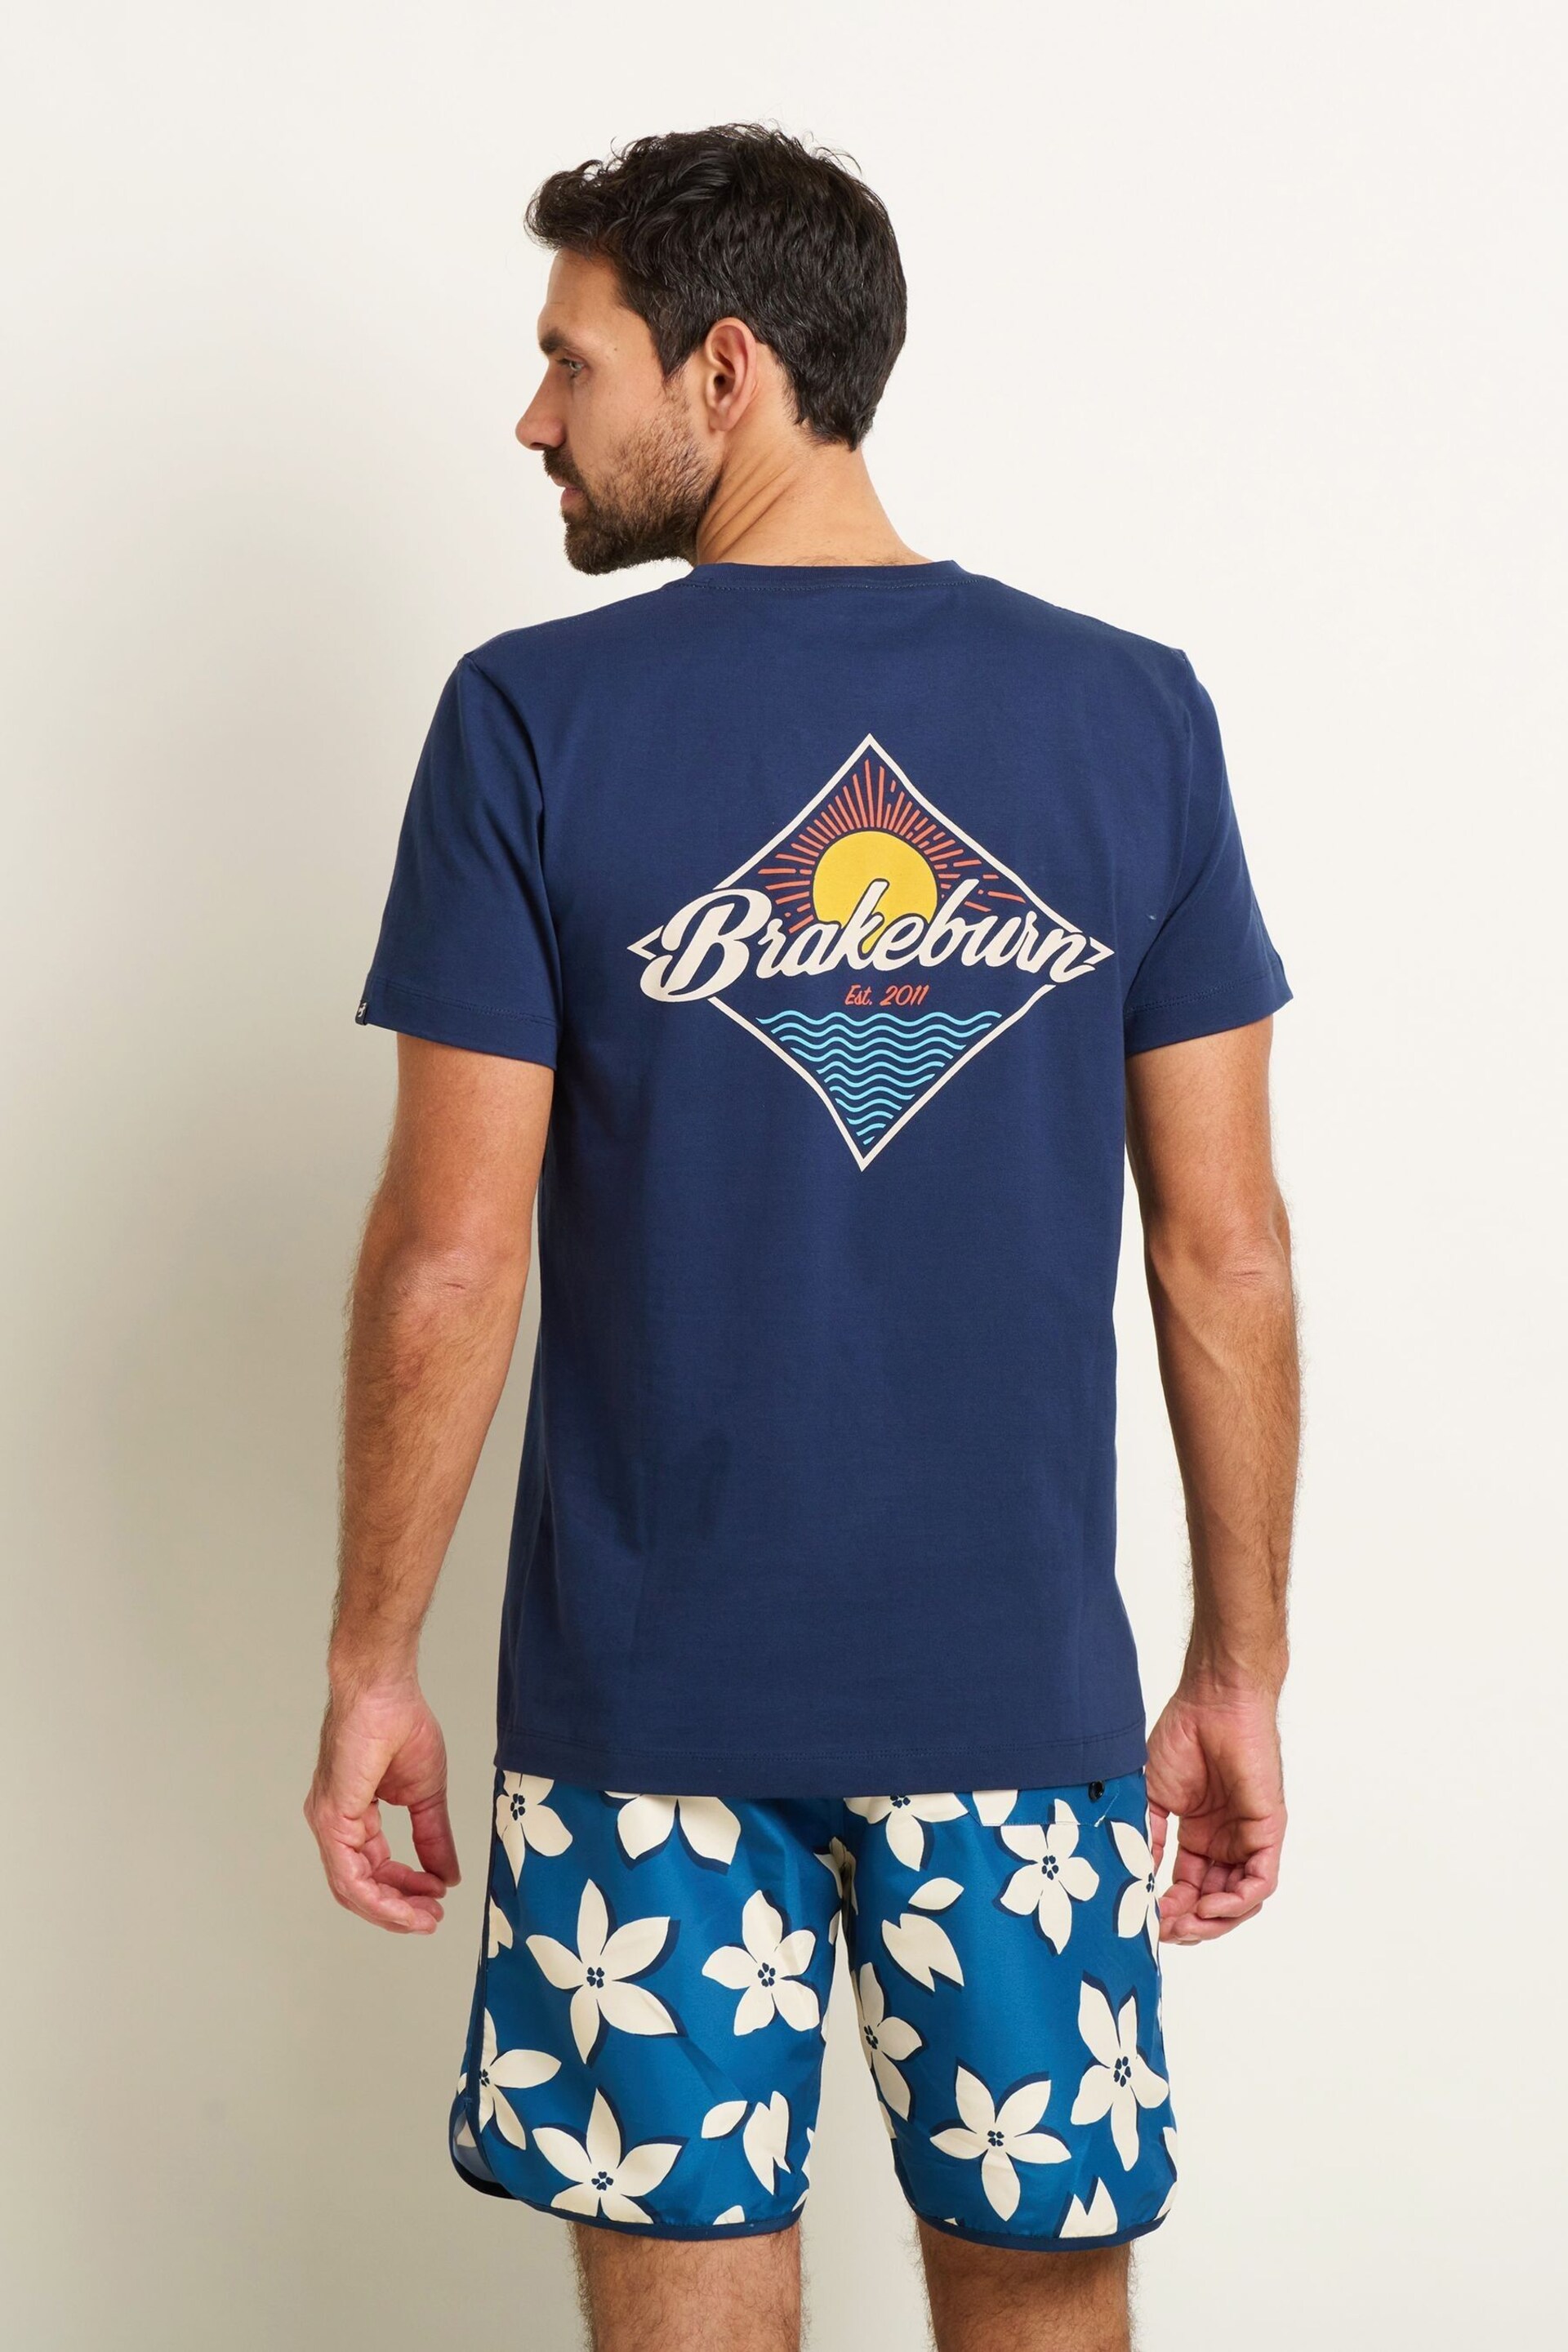 Brakeburn Blue Diamond T-Shirt - Image 3 of 6